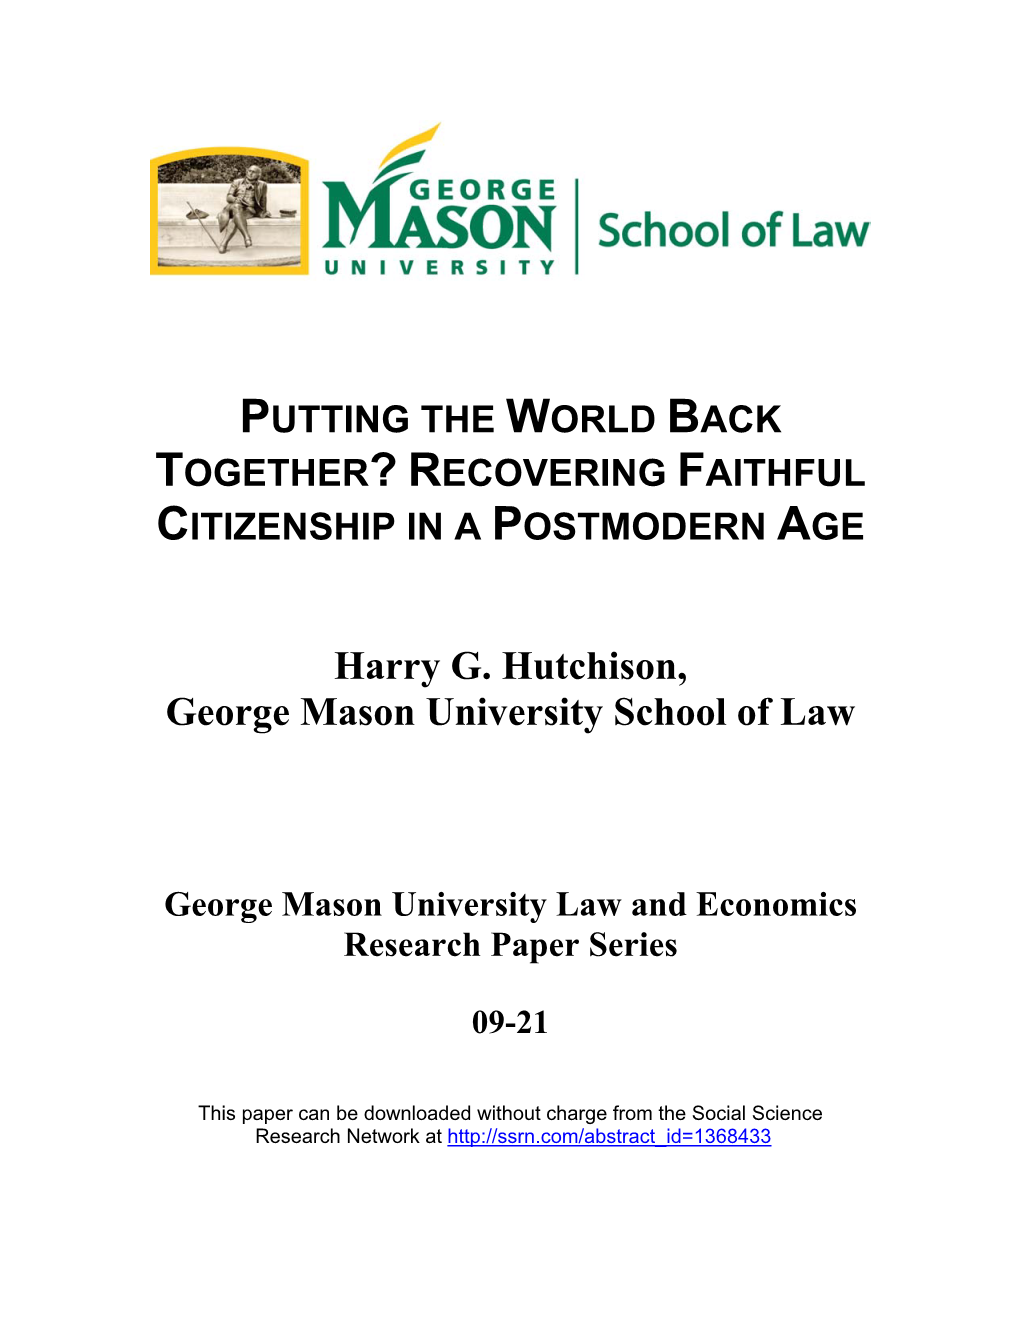 Harry G. Hutchison, George Mason University School of Law